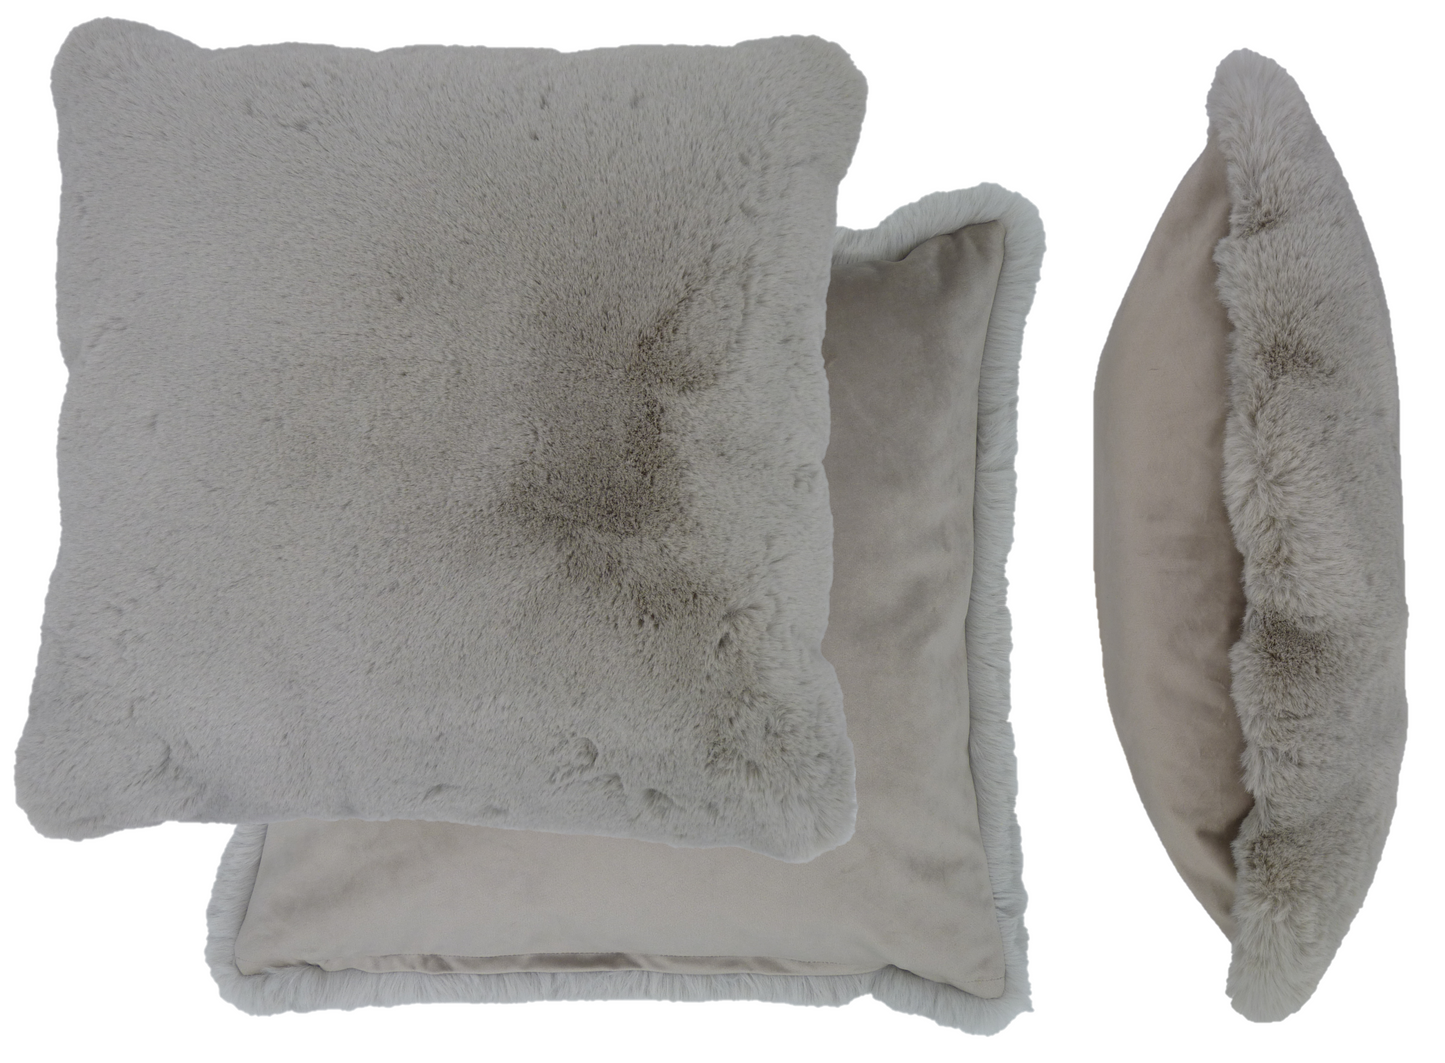 Supersoft Faux Fur Cushion Cover Silver Grey 45cm x 45cm